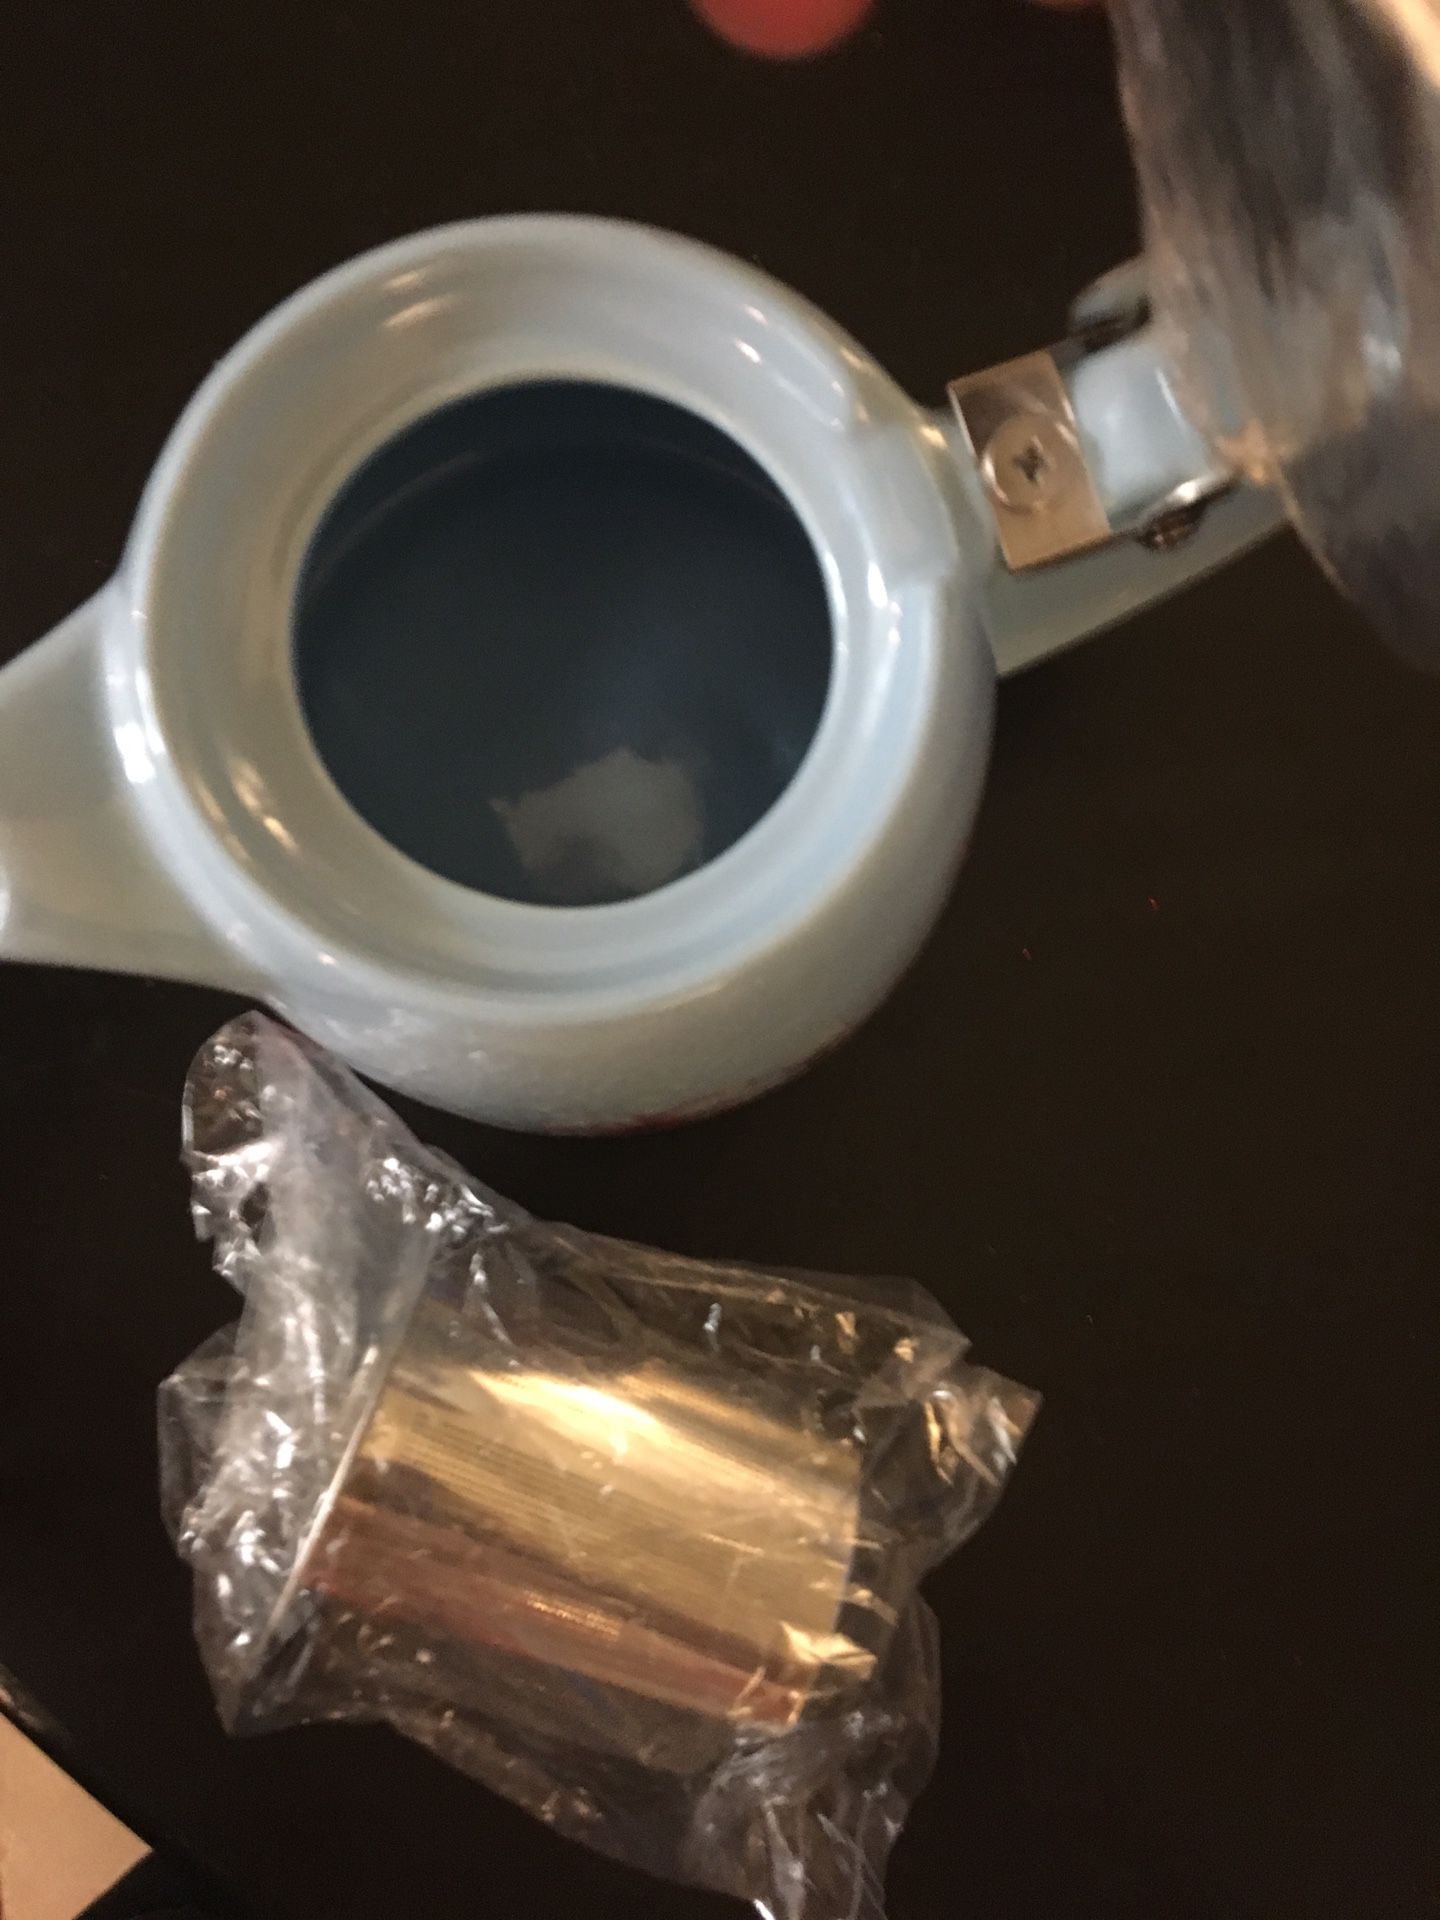 Teapot with tea strainer